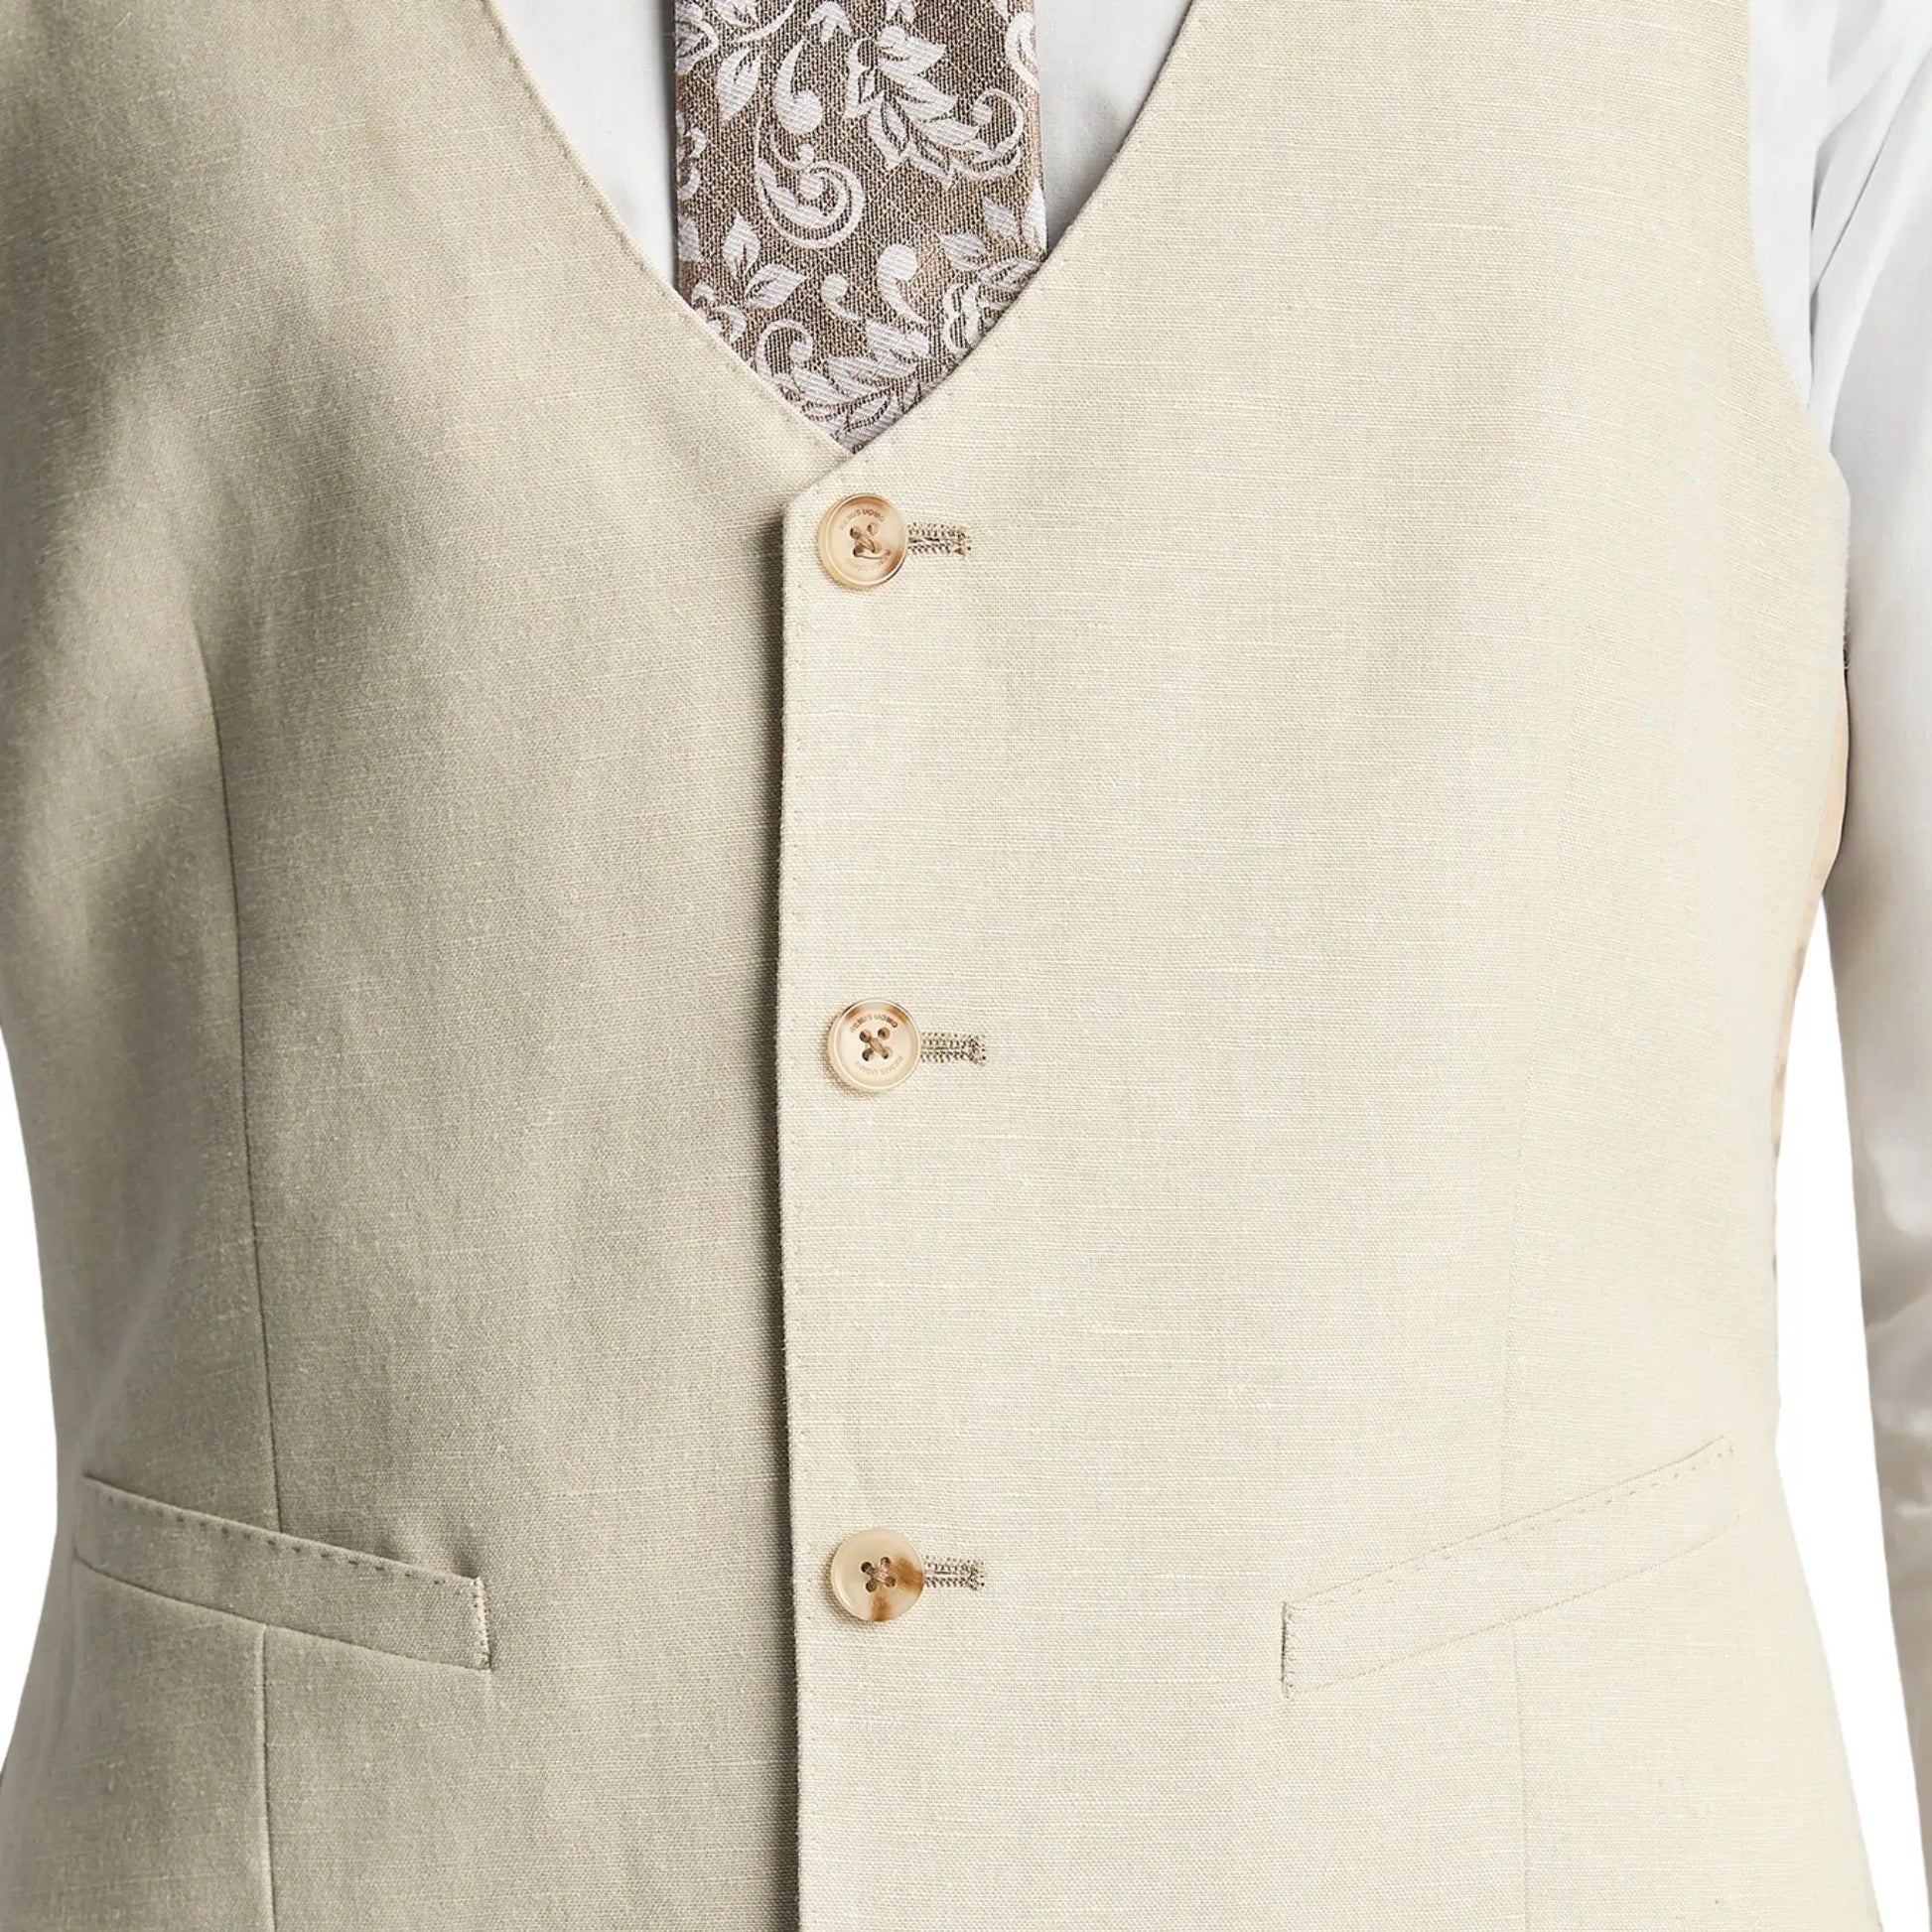 Buy Remus Uomo Massa Suit Waistcoat - Stone | Suit Waistcoatss at Woven Durham